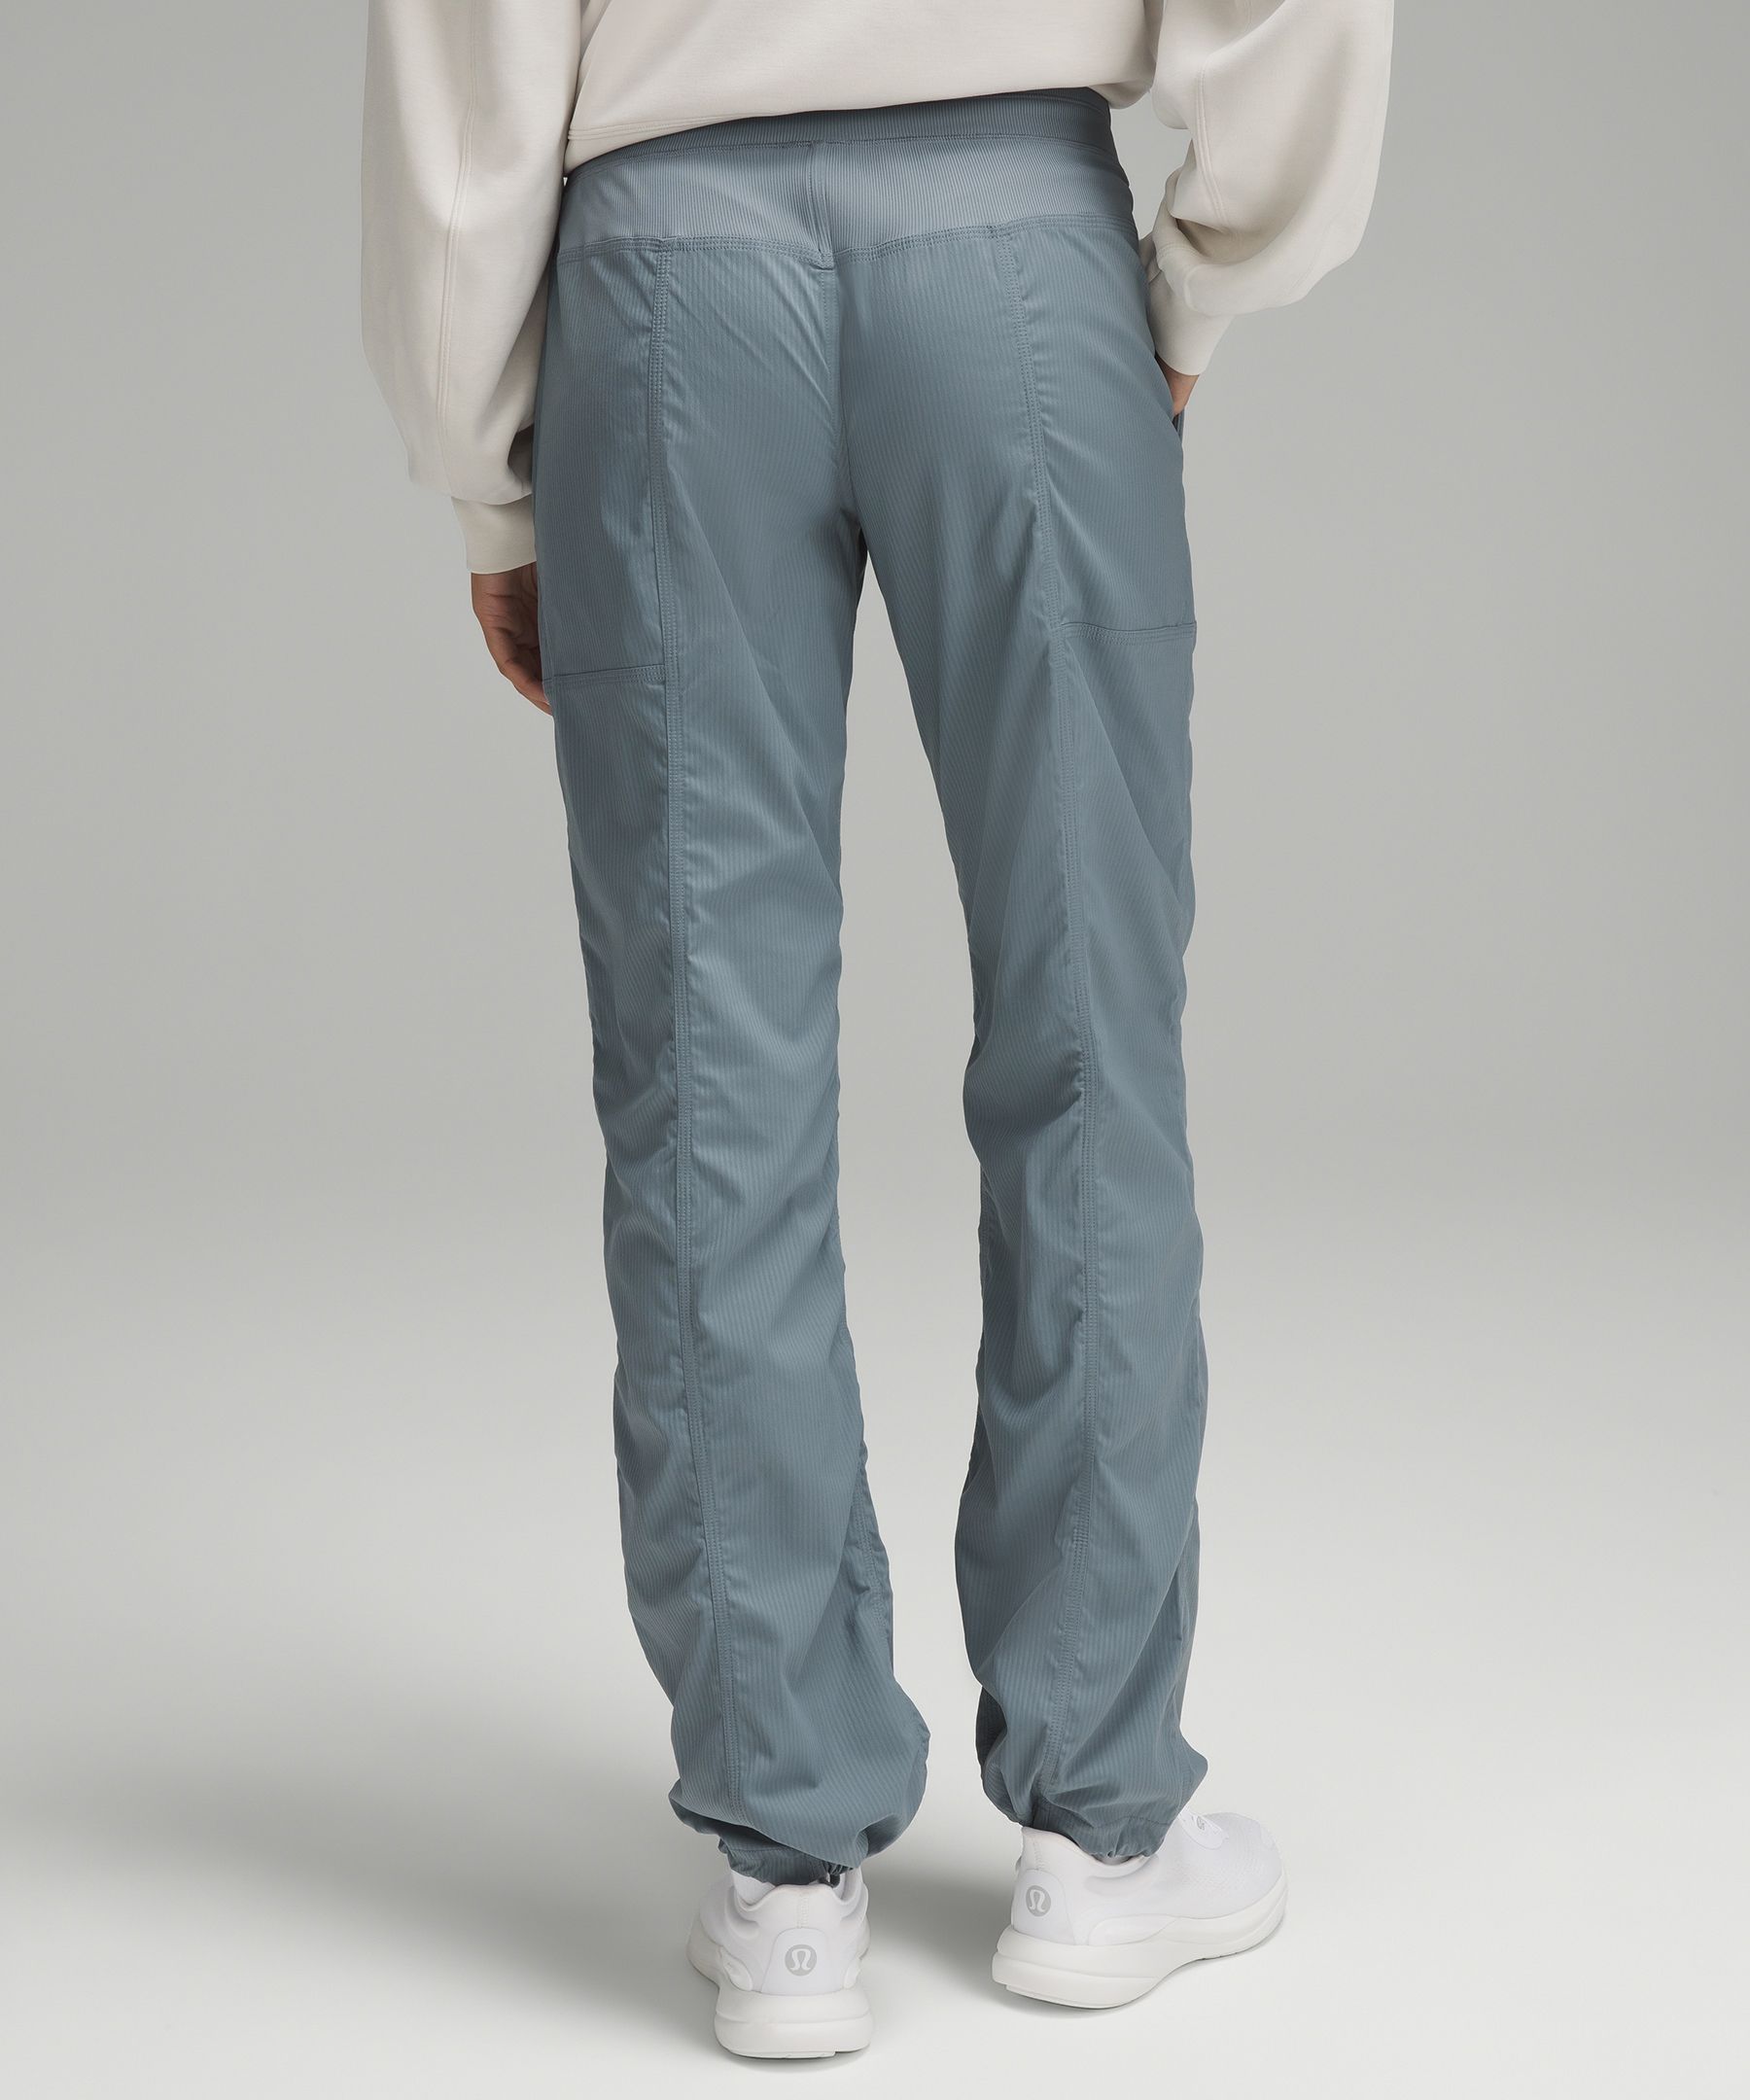 lululemon athletica, Pants & Jumpsuits, Lululemon Dance Studio Lined Navy  Blue Pants Size 2 Shopping Bag